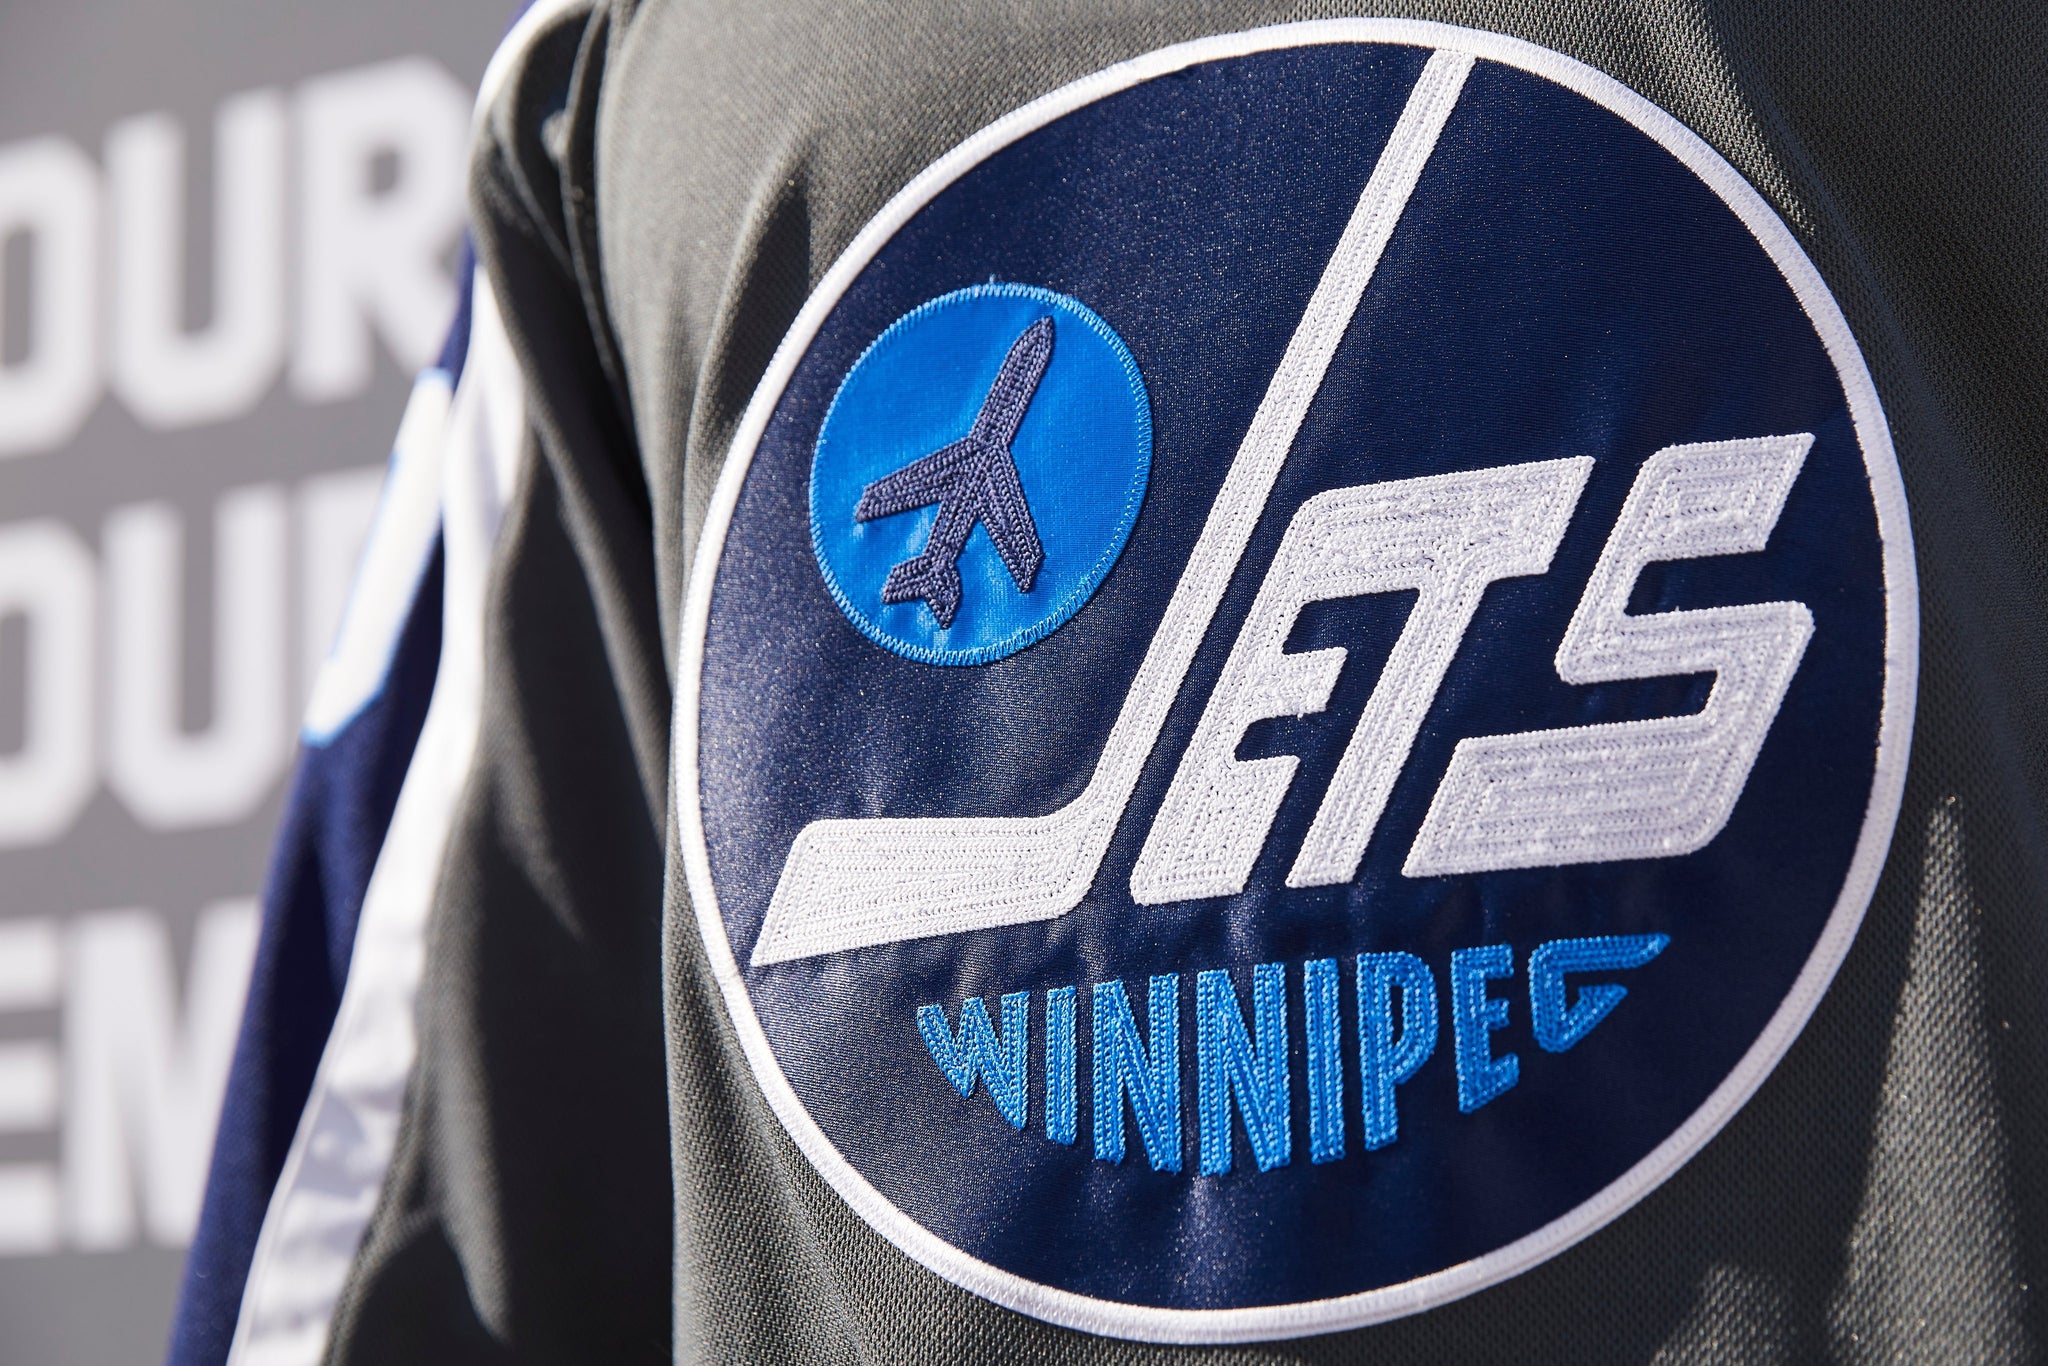 Winnipeg Jets Reverse Retro gear available today